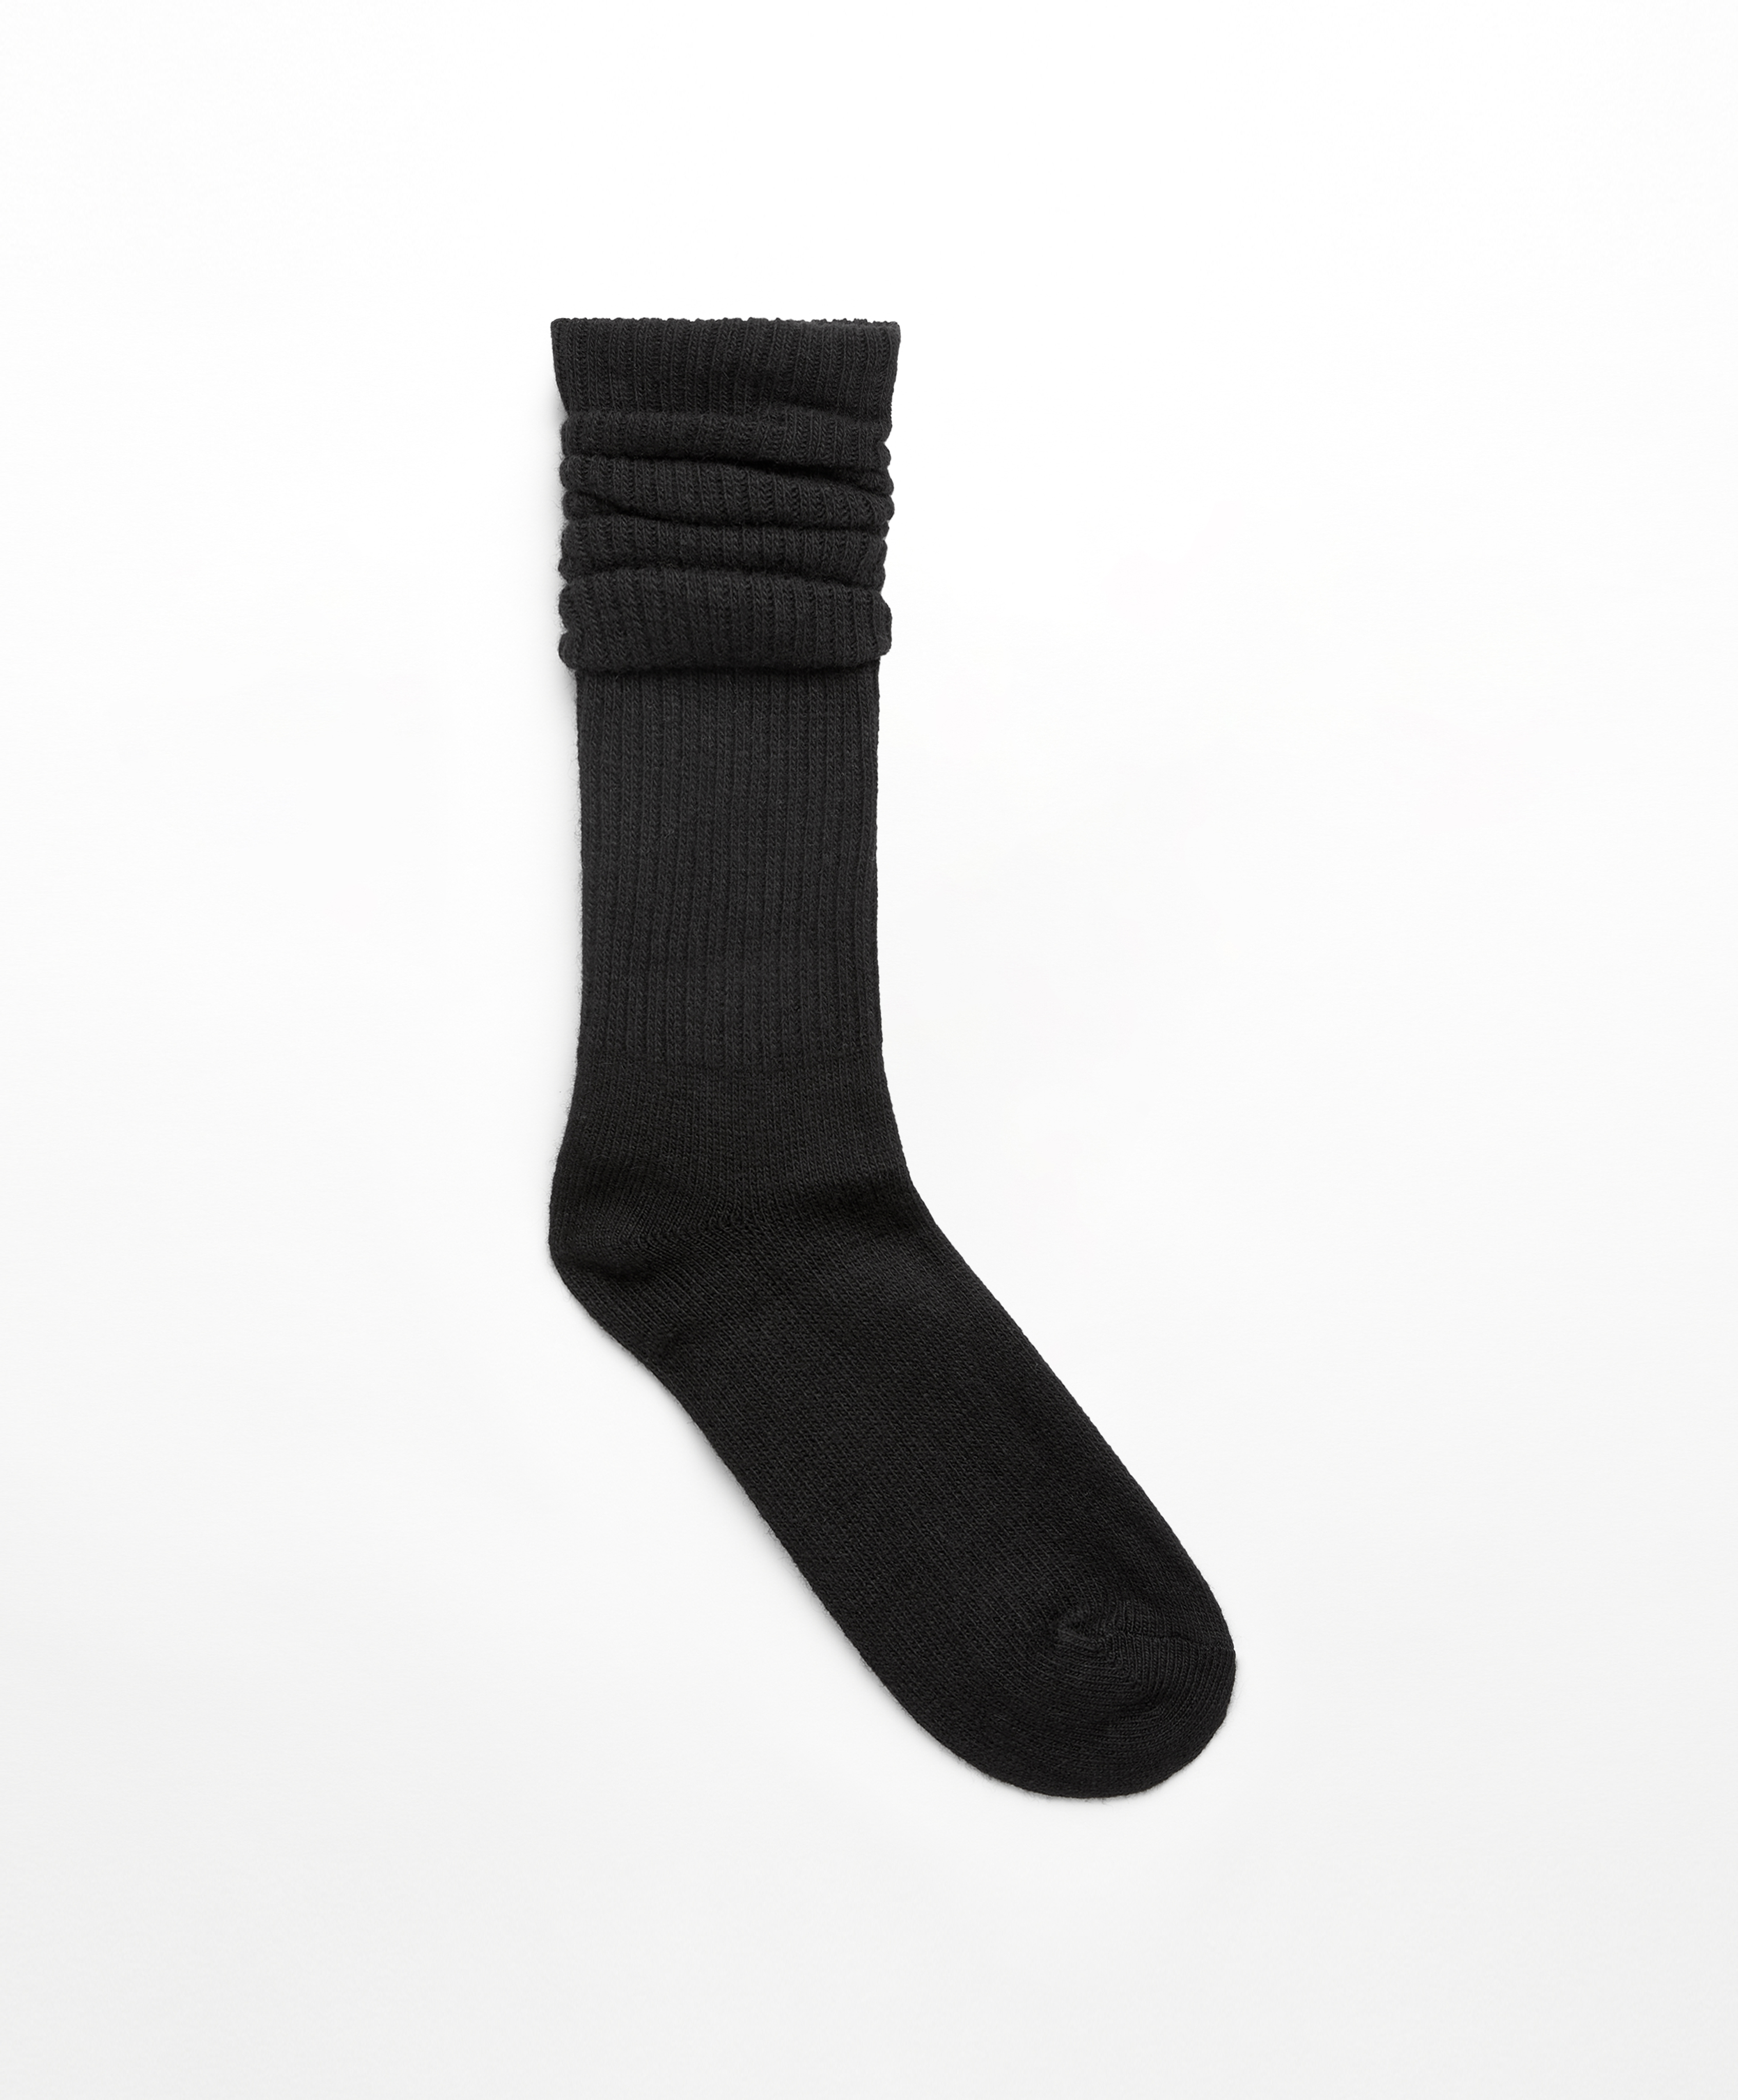 Long 29% wool socks